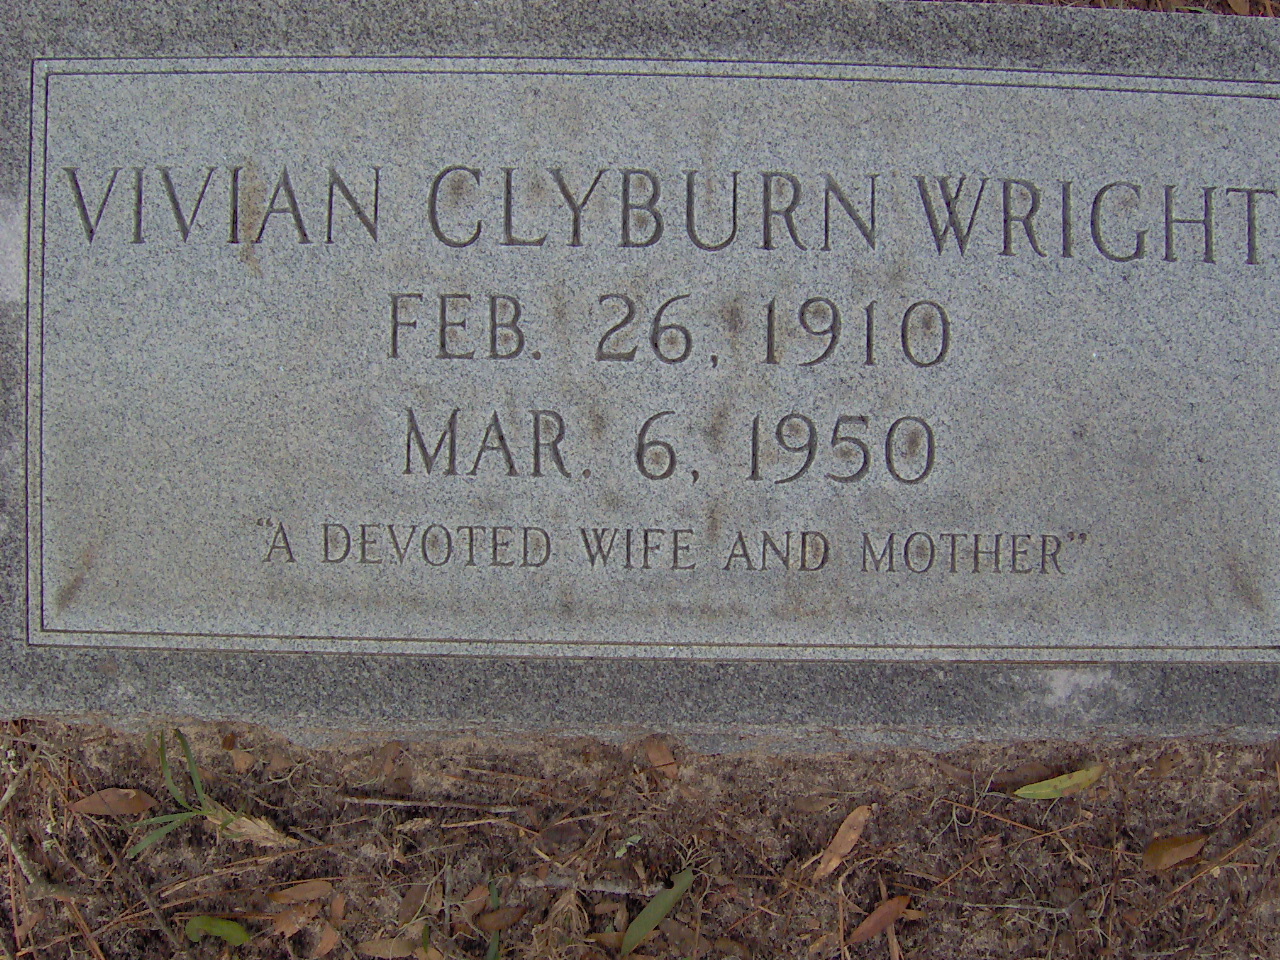 Headstone for Wright, Vivian Clyburn